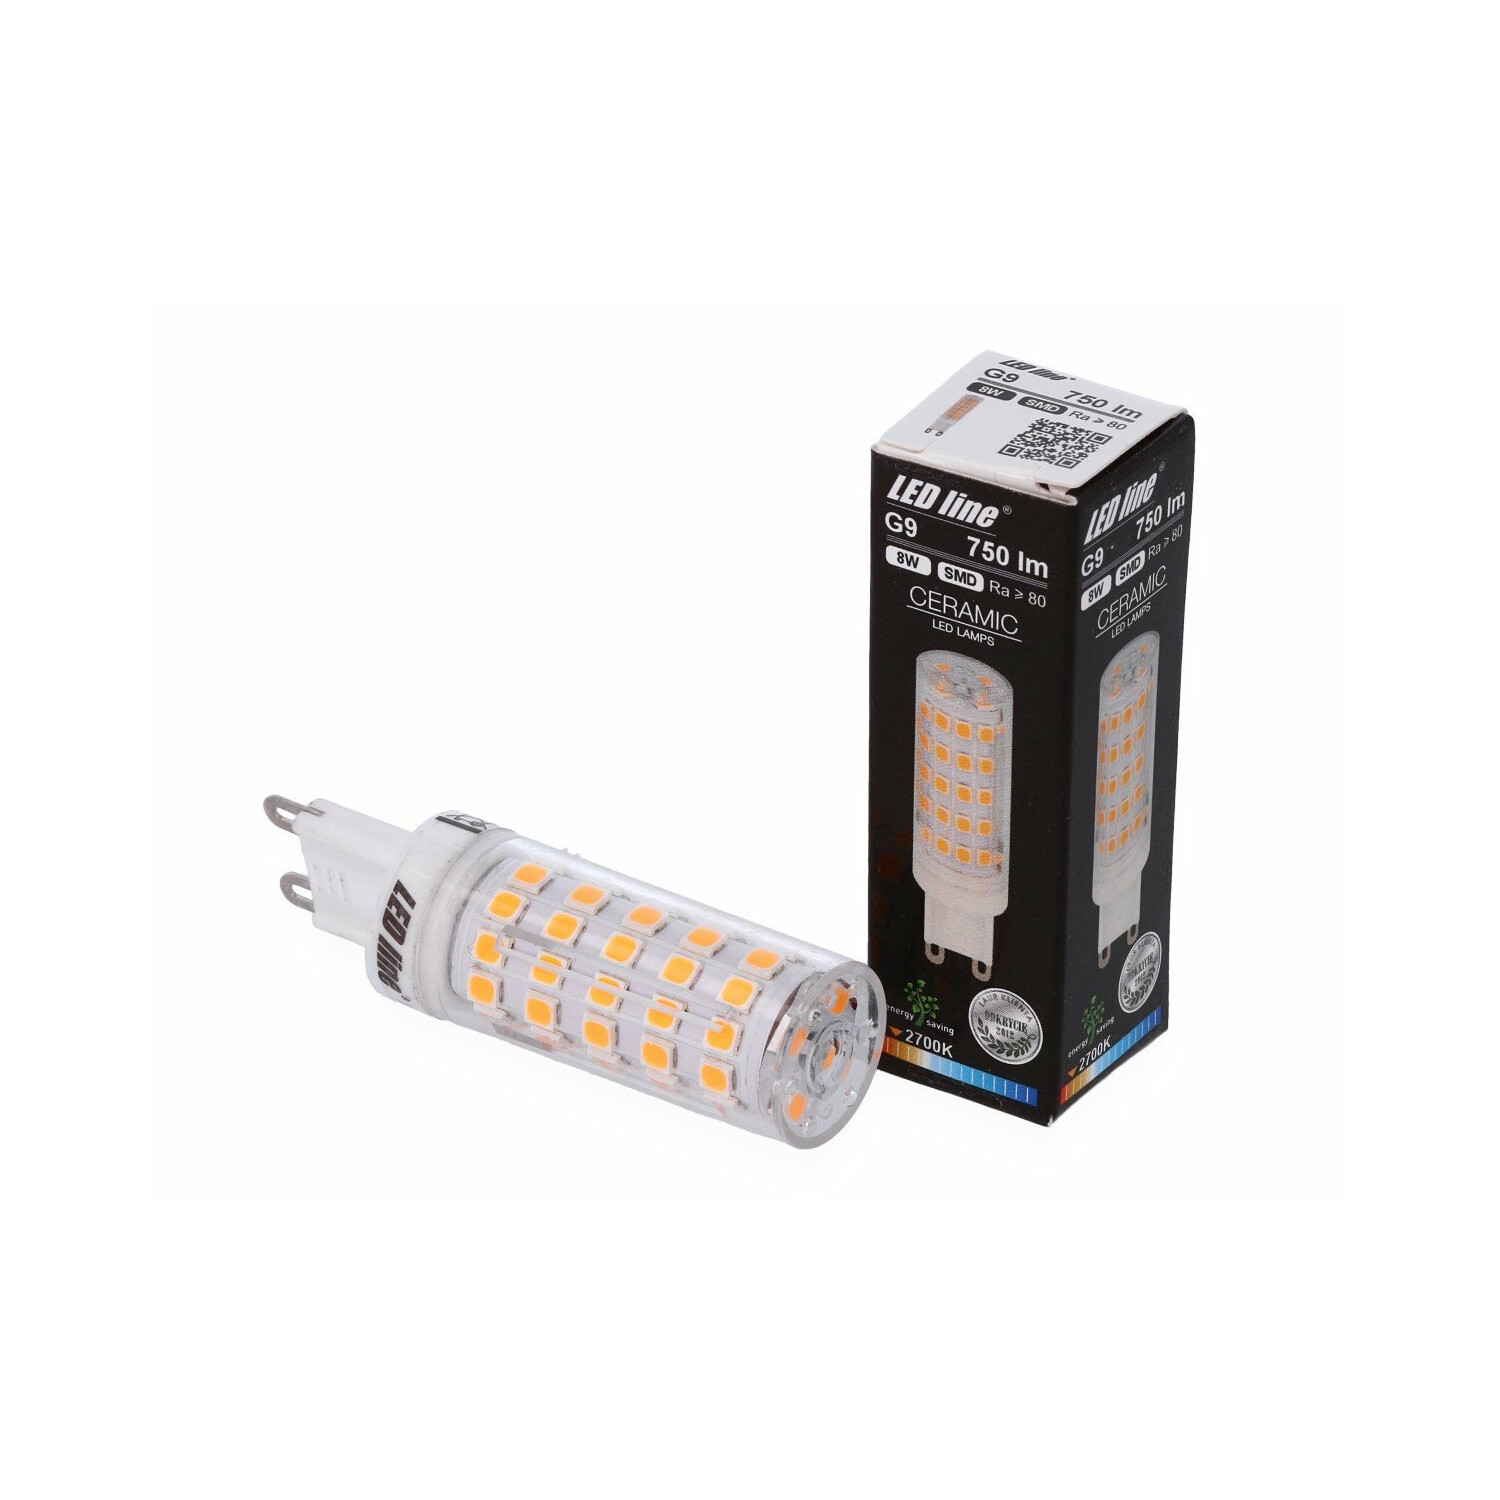 LED LINE LED Warmweiß 8W G9 750 Lumen 10er Pack LED Leuchtmittel